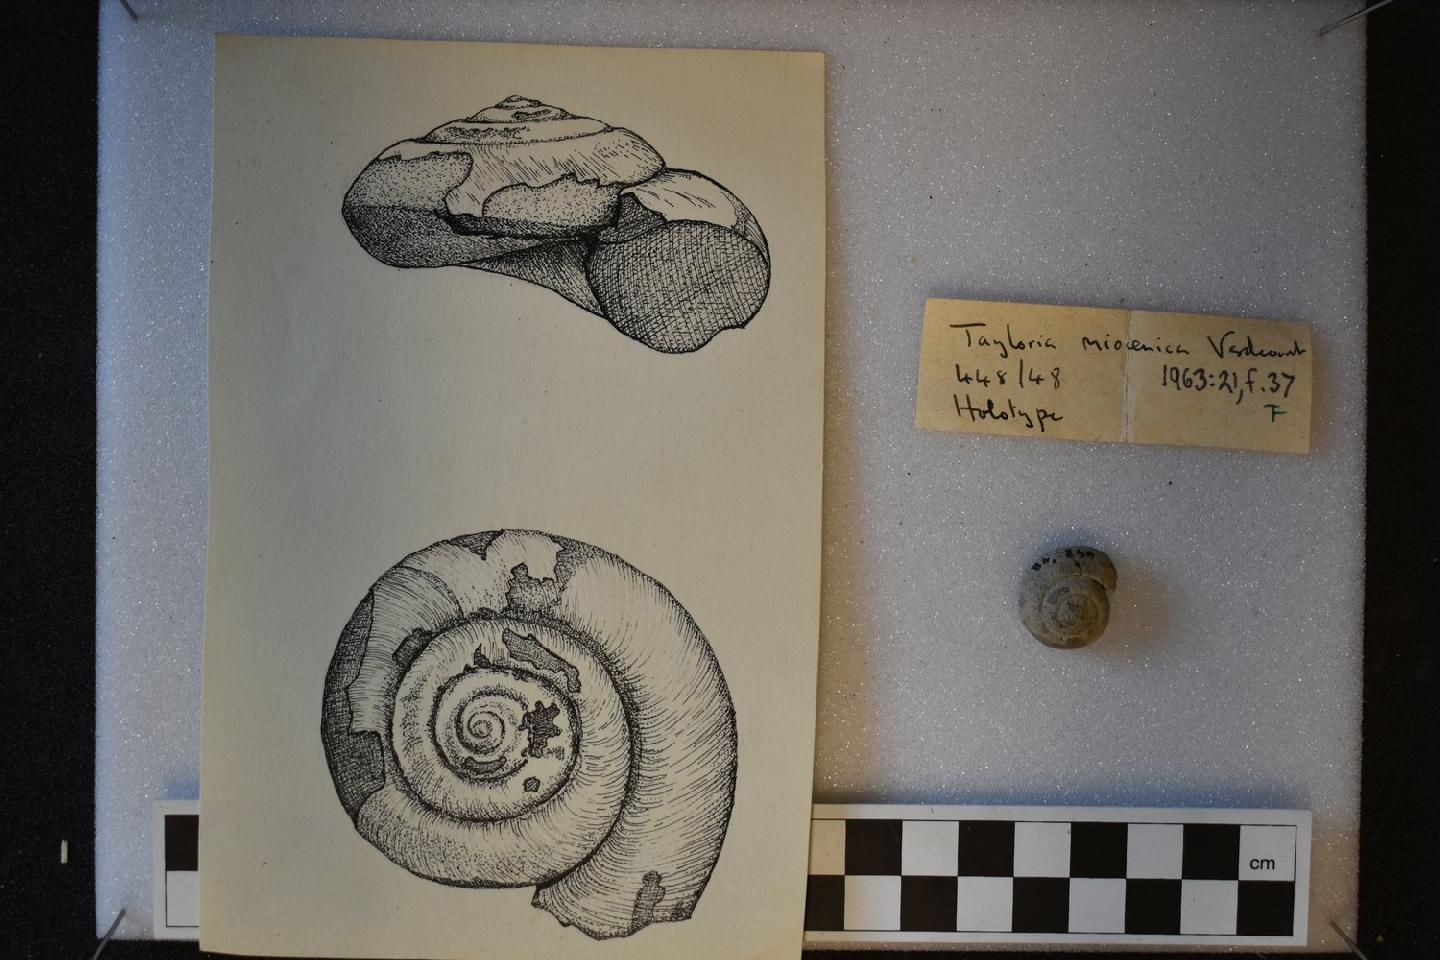 To NHMUK collection (Tayloria miocenica Verdcourt, 1963; HOLOTYPE; NHMUK:ecatalogue:9612326)